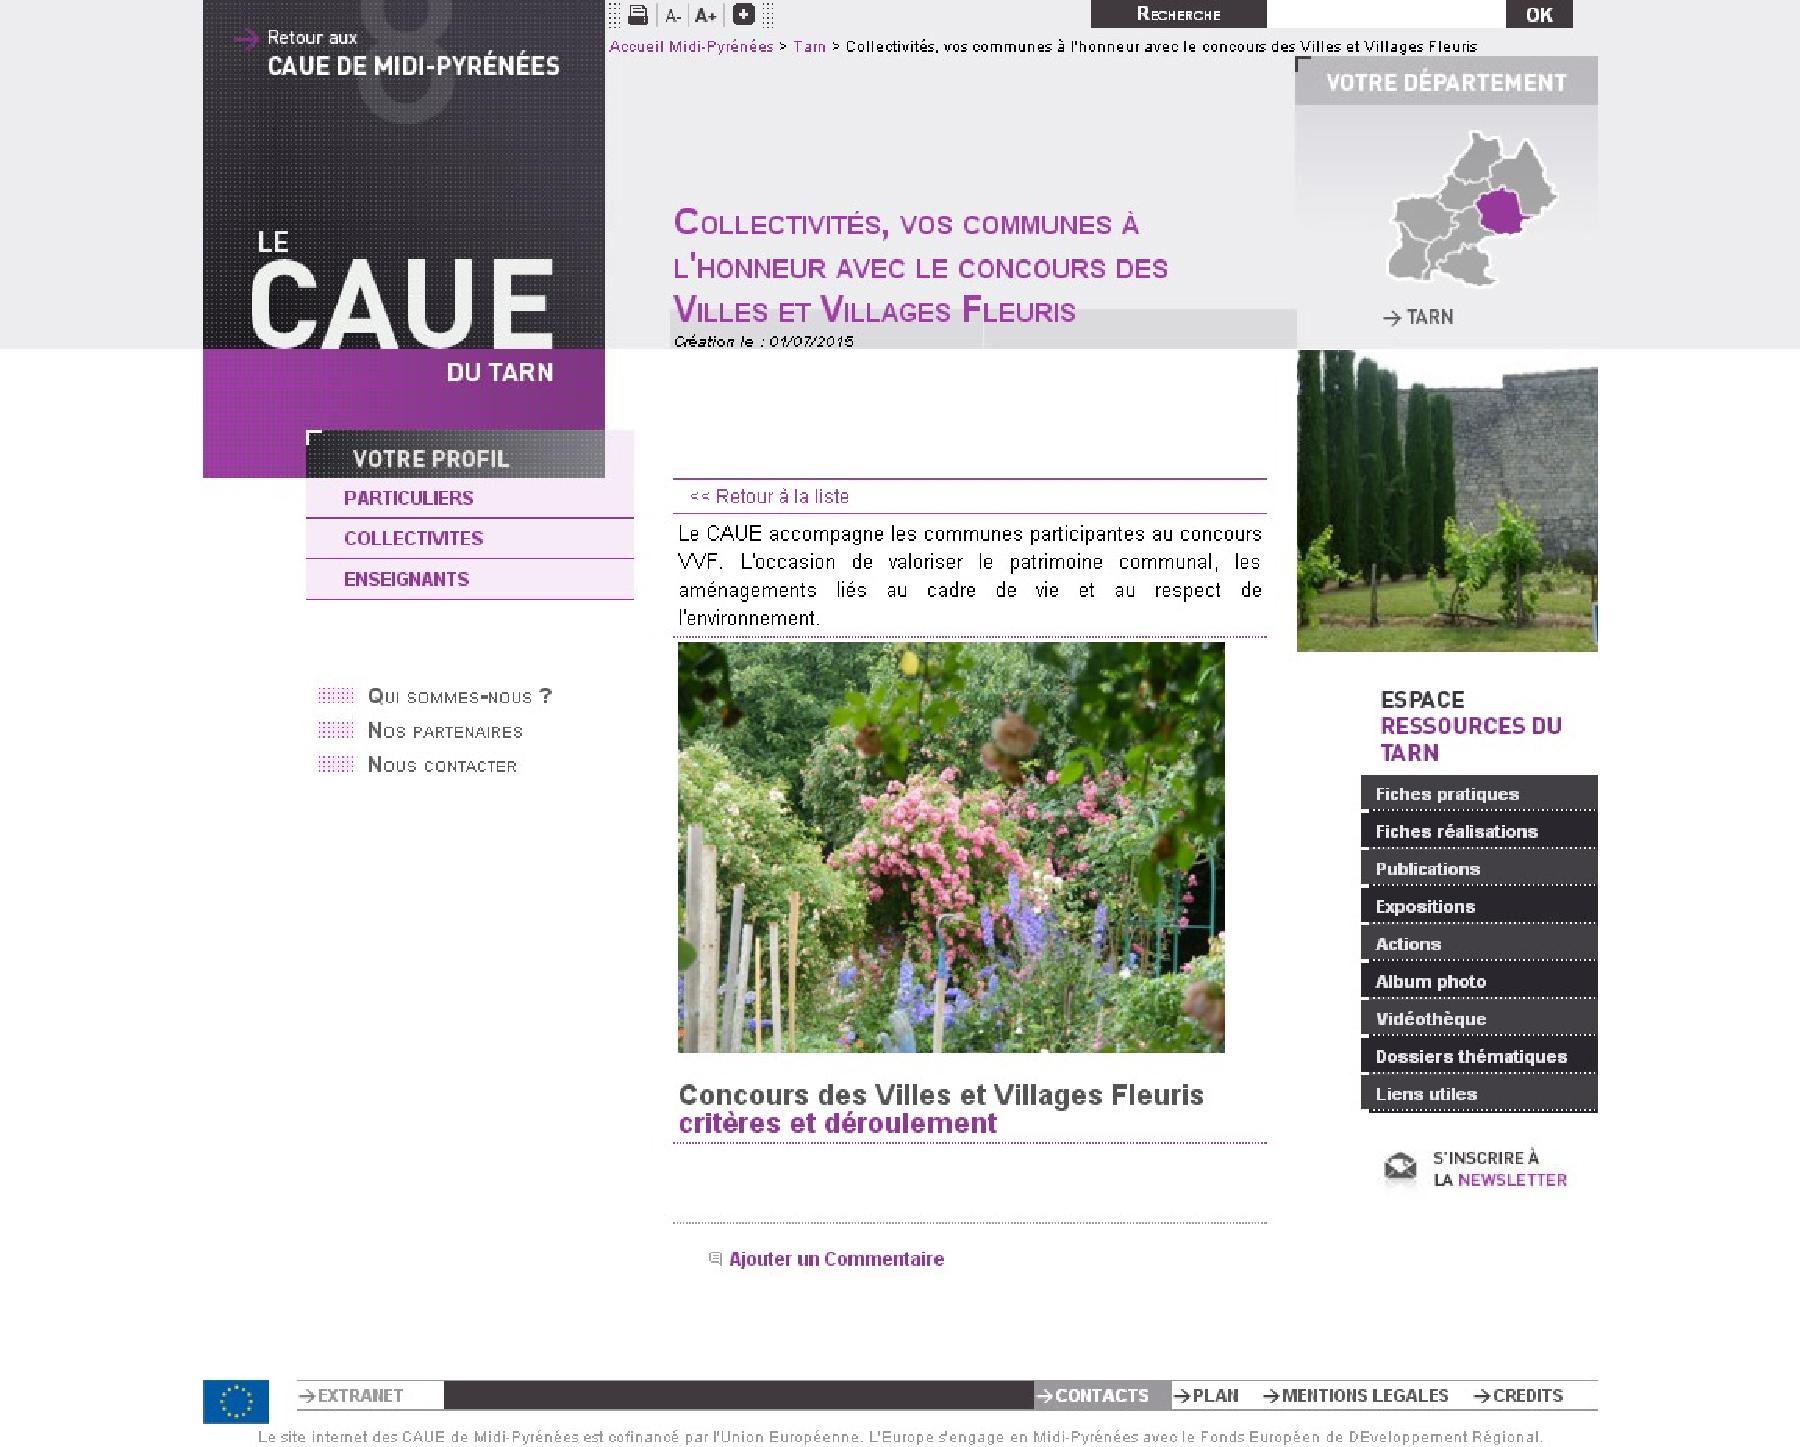 www.caue-mp.fr_81-tarn villages fleuris-page-001.jpg